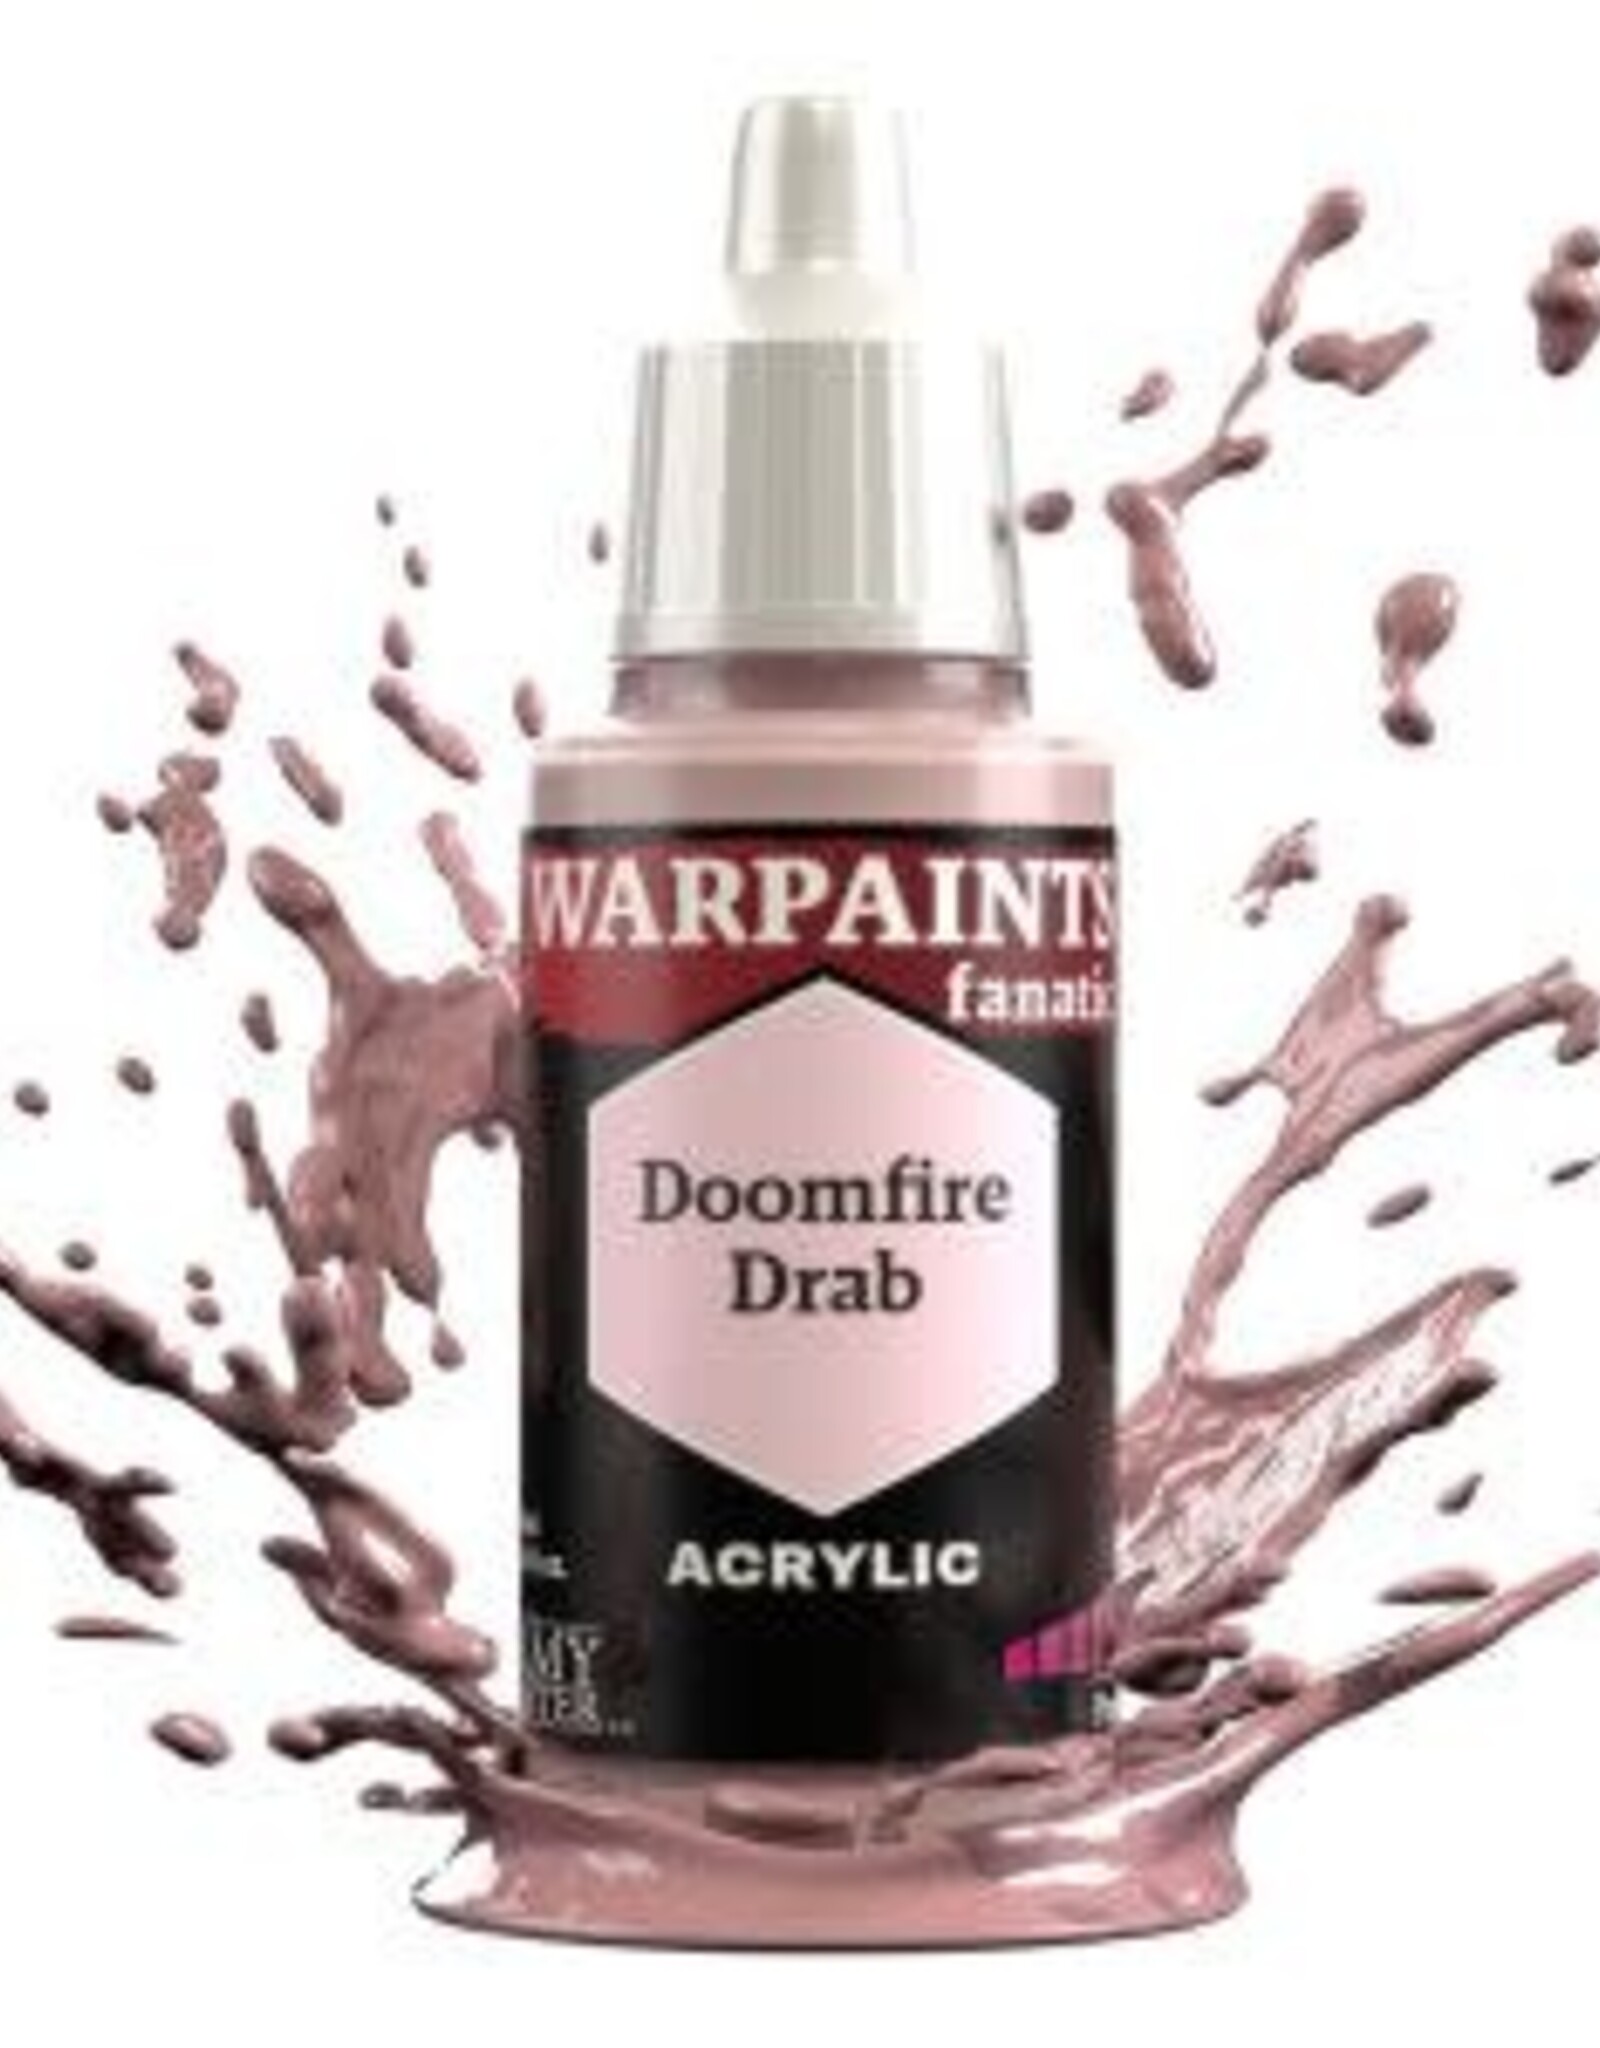 Warpaints Fanatic: Doomfire Drab